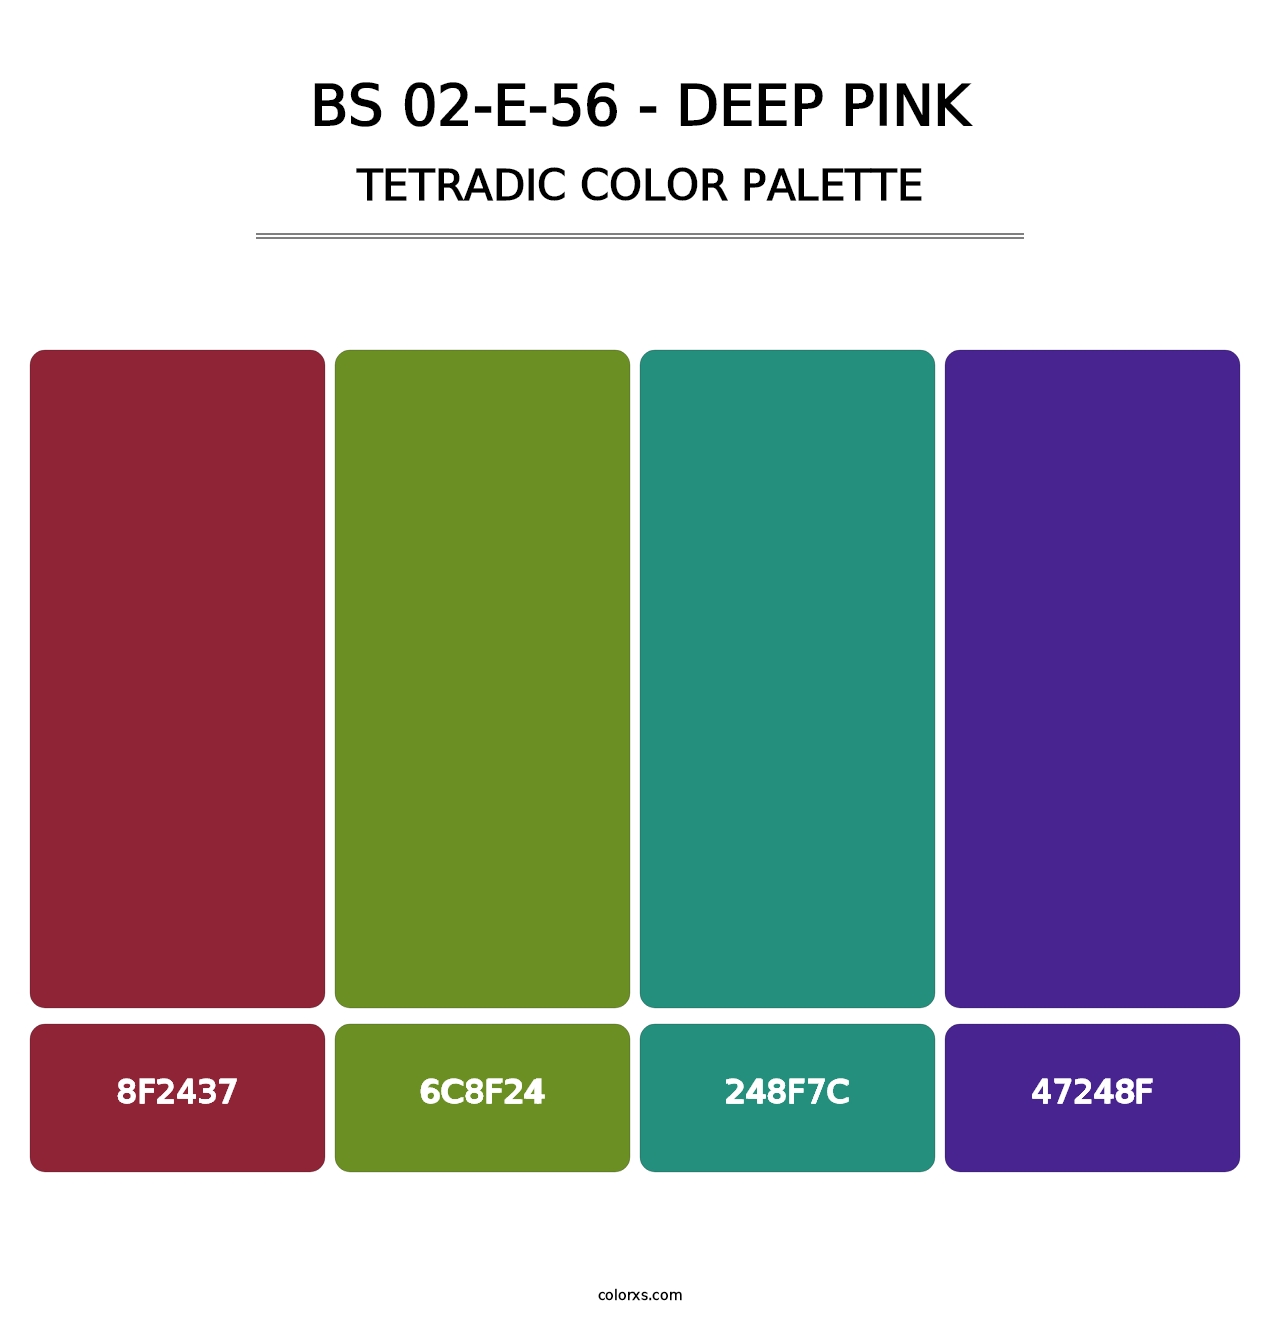 BS 02-E-56 - Deep Pink - Tetradic Color Palette